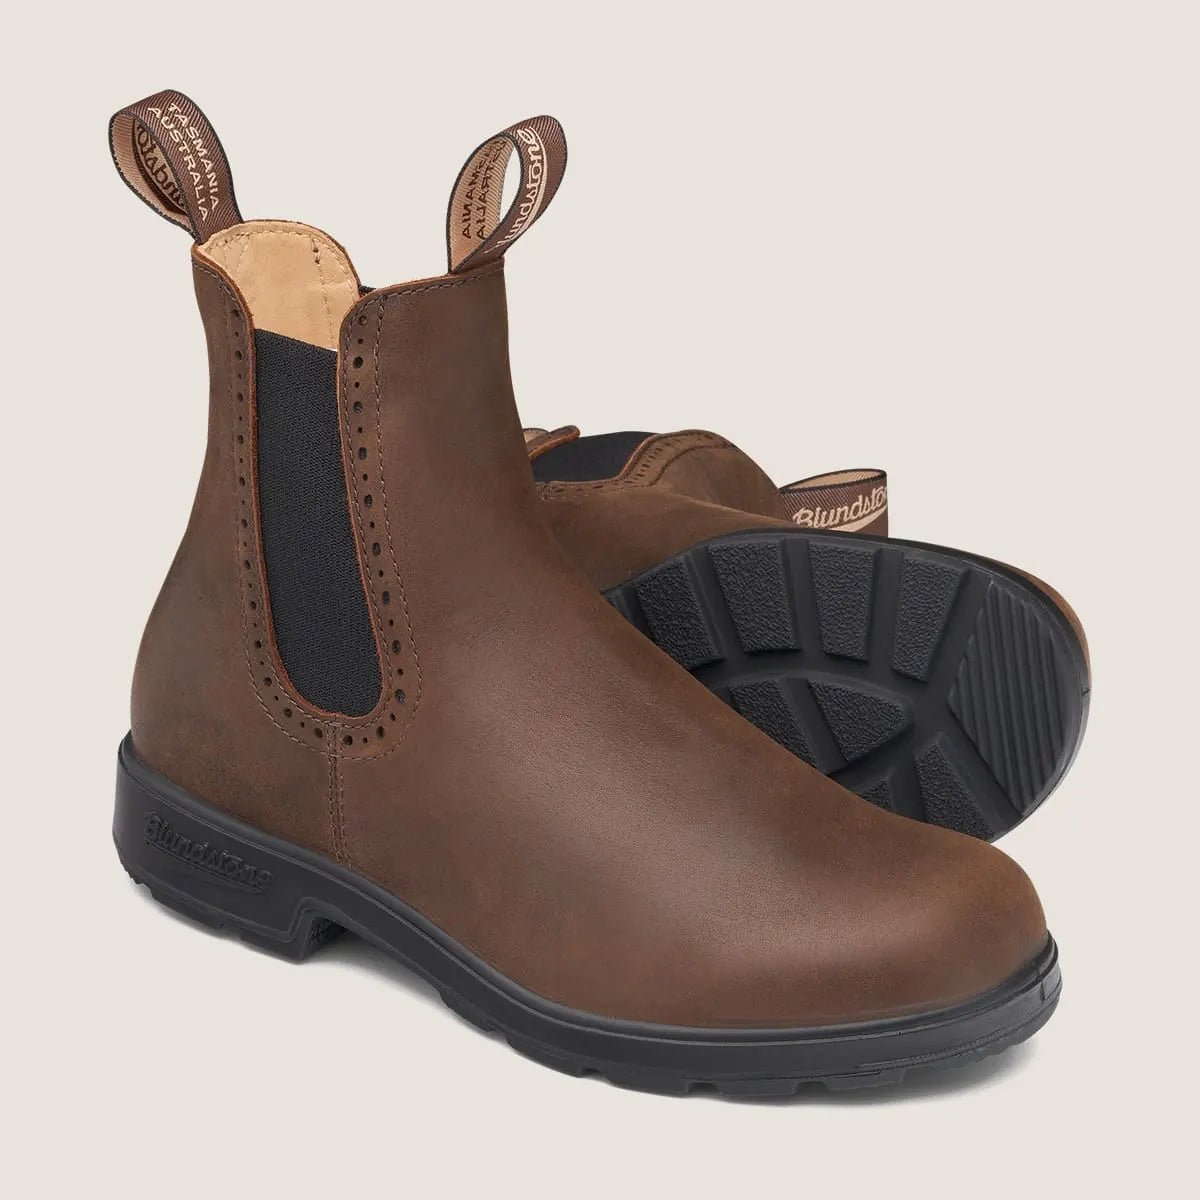 Blundstone Women's 2151 Originals High Top Boots - Antique Brown